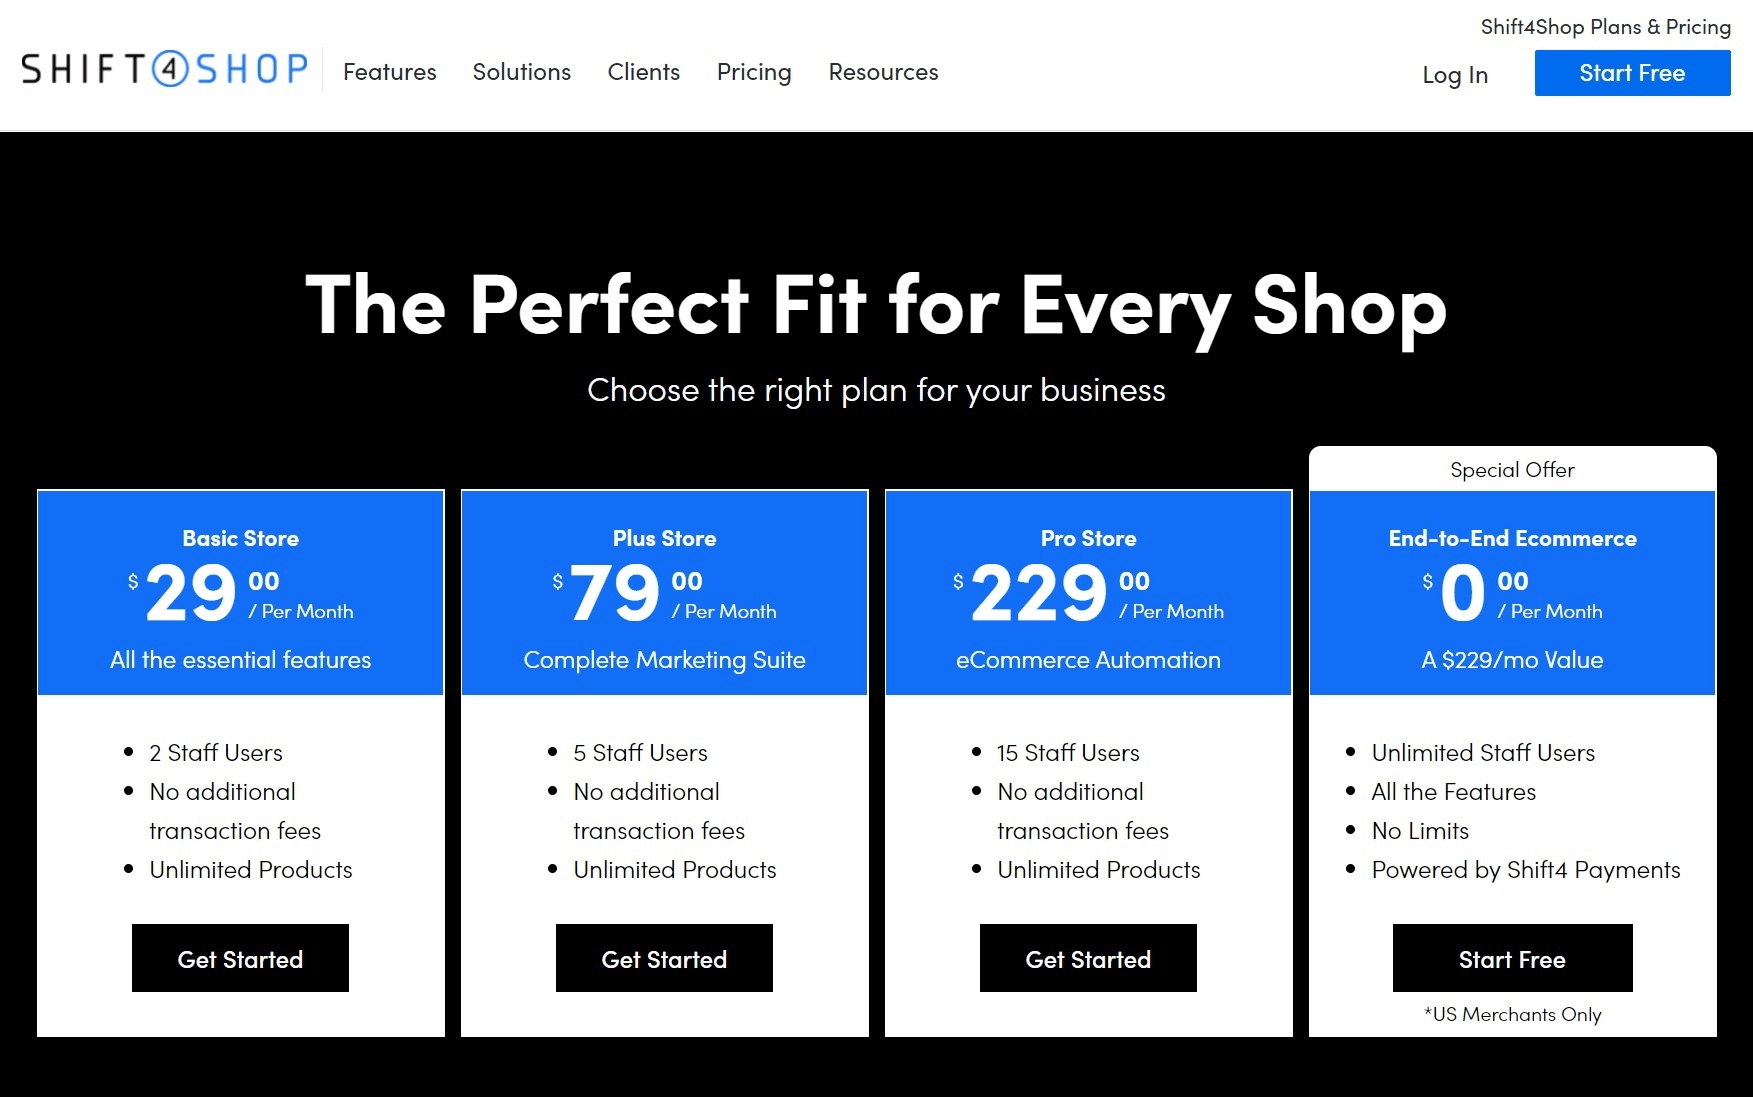 Shift4Shop pricing plans